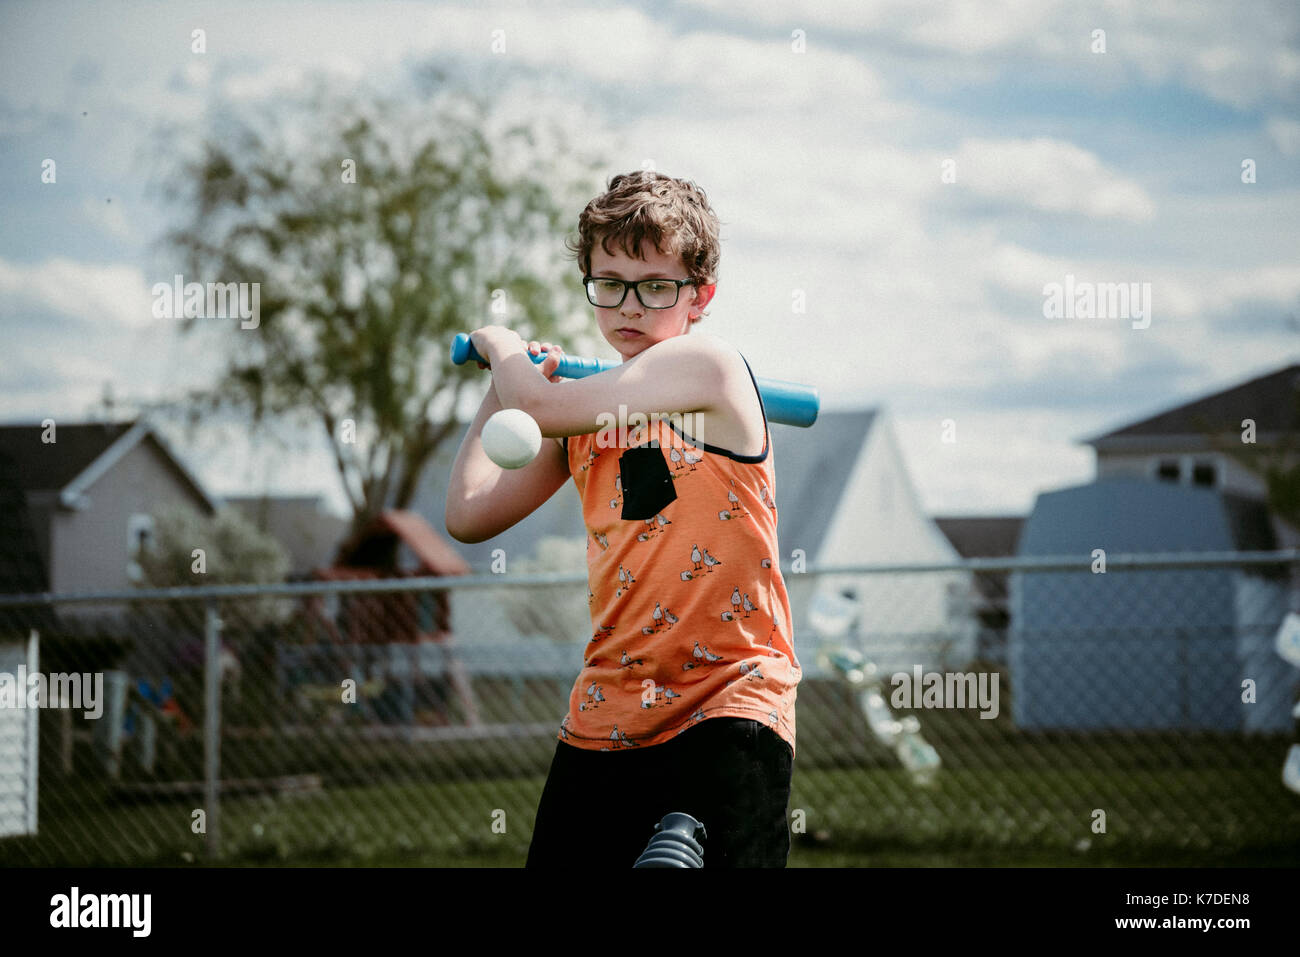 Teenage boy hitting ball while standing on playing field Stock Photo